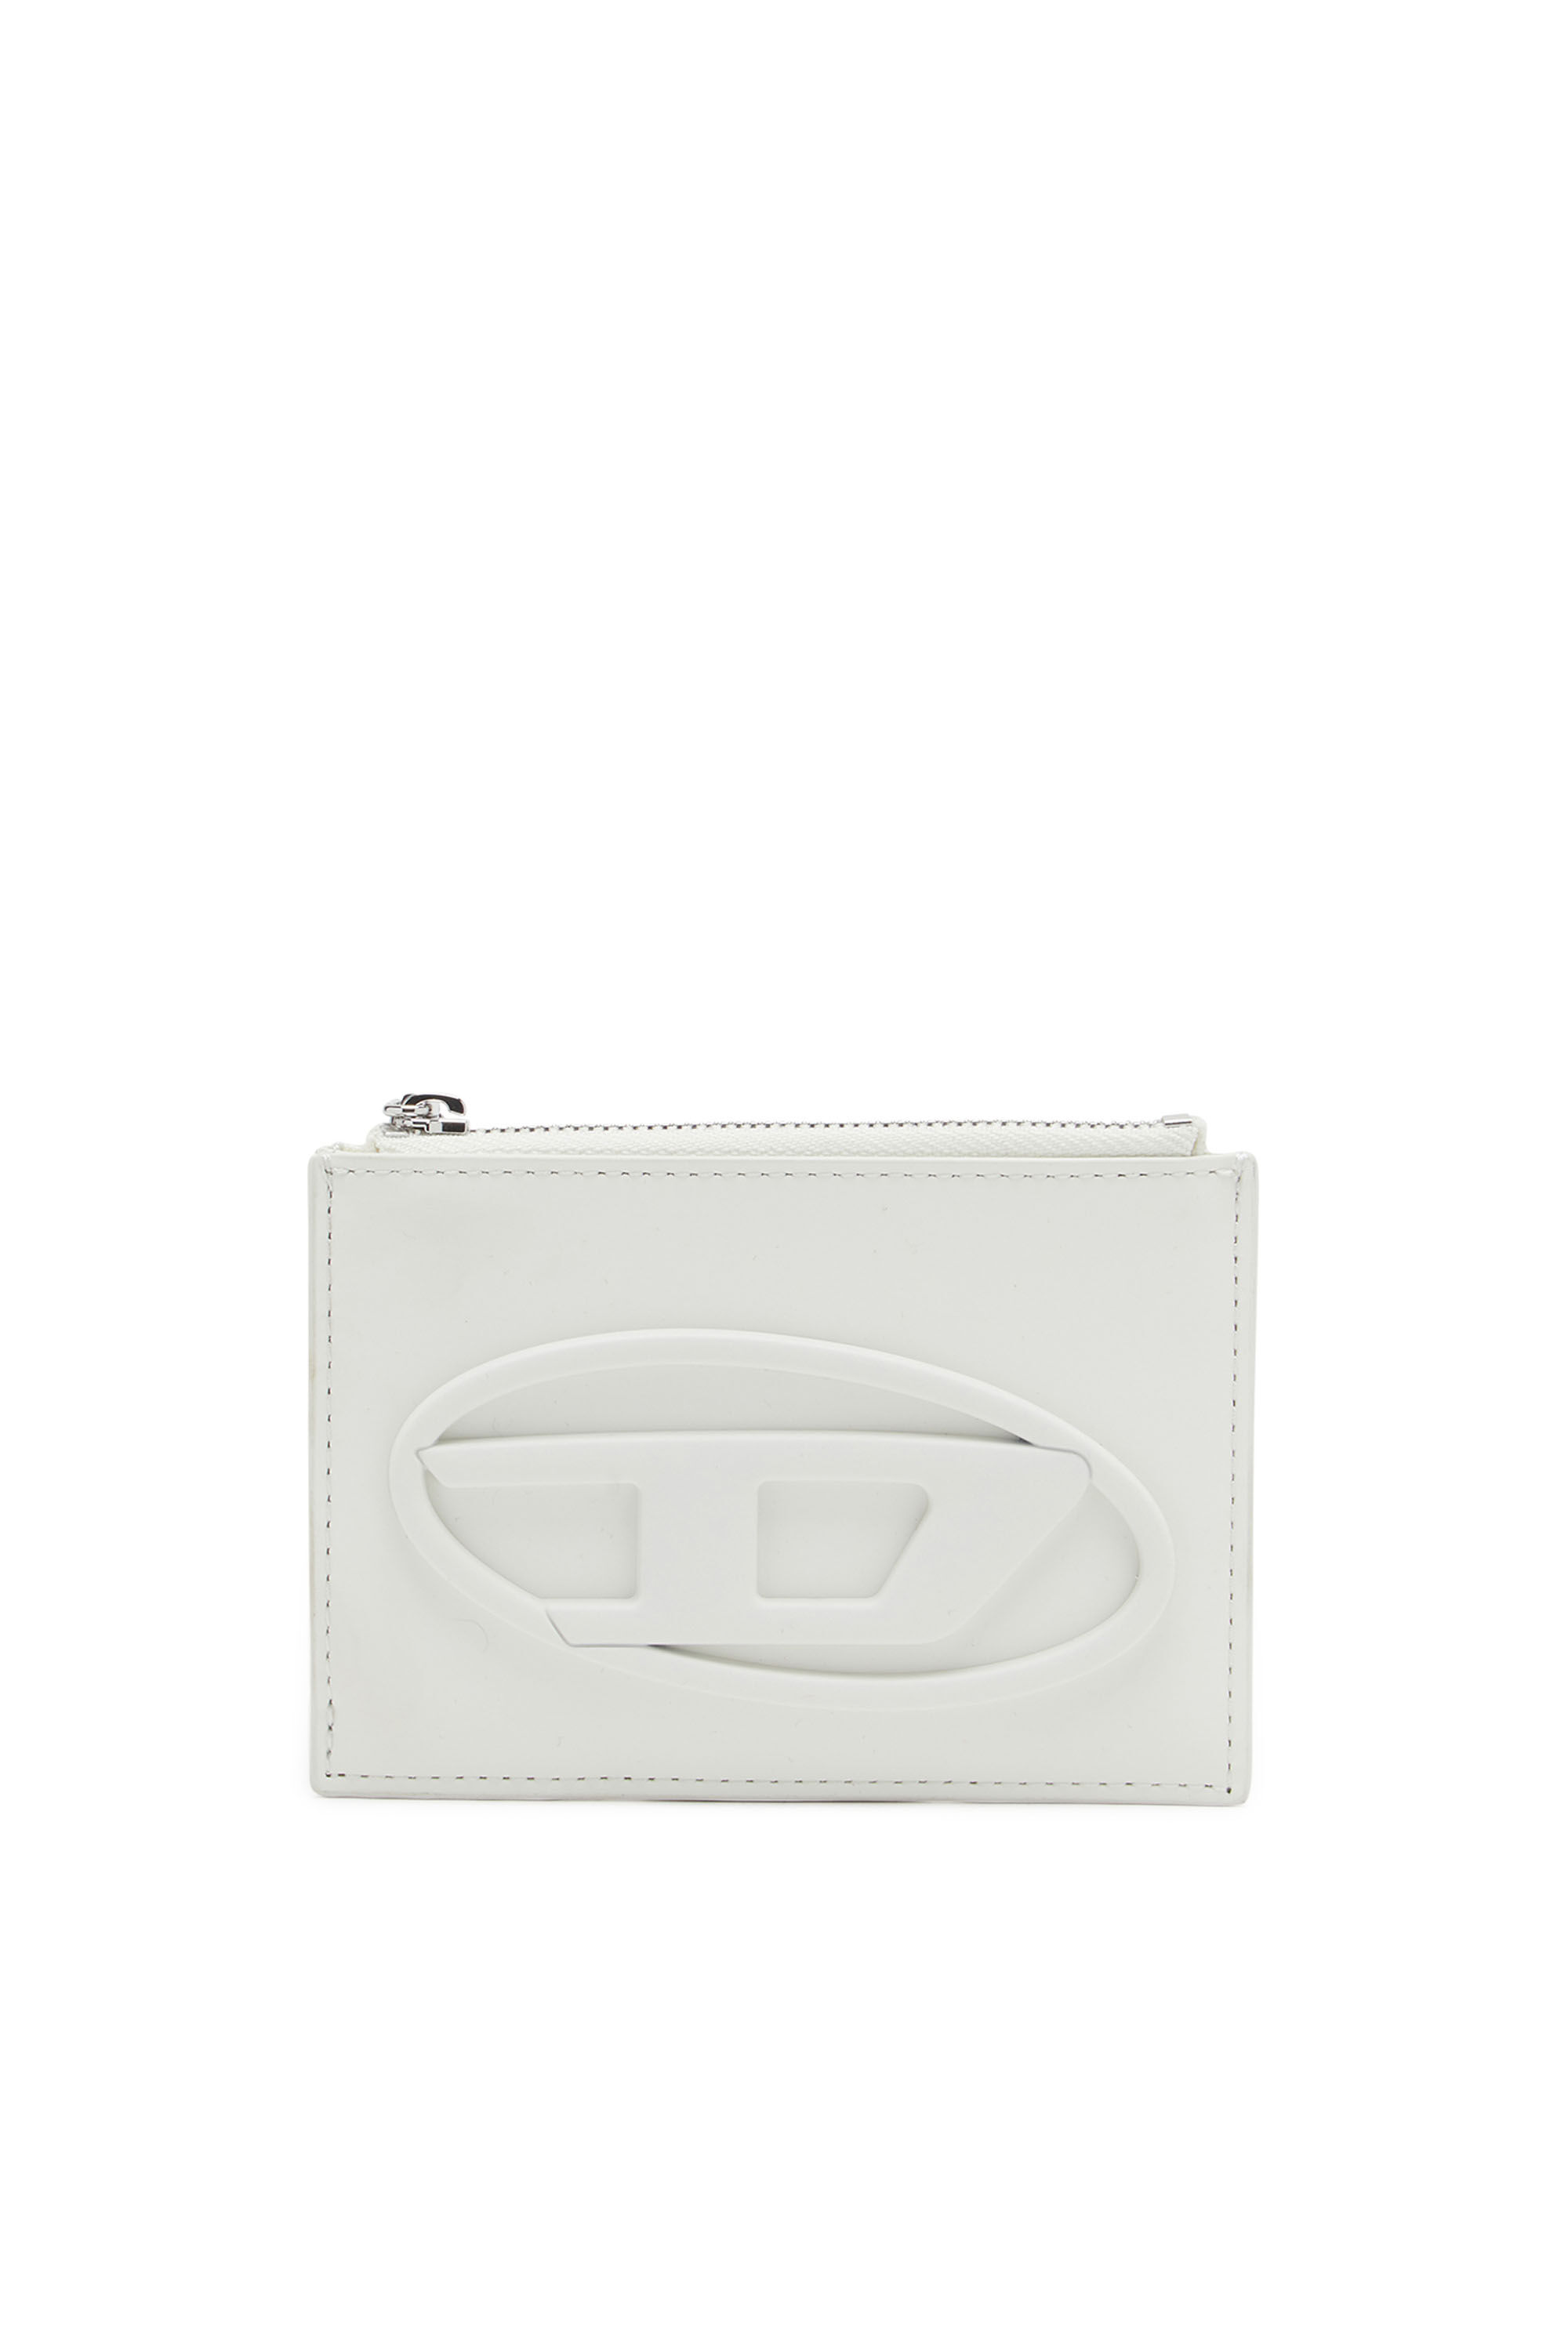 Diesel - 1DR CARD HOLDER I, Donna Portacarte in pelle opaca in Bianco - Image 1